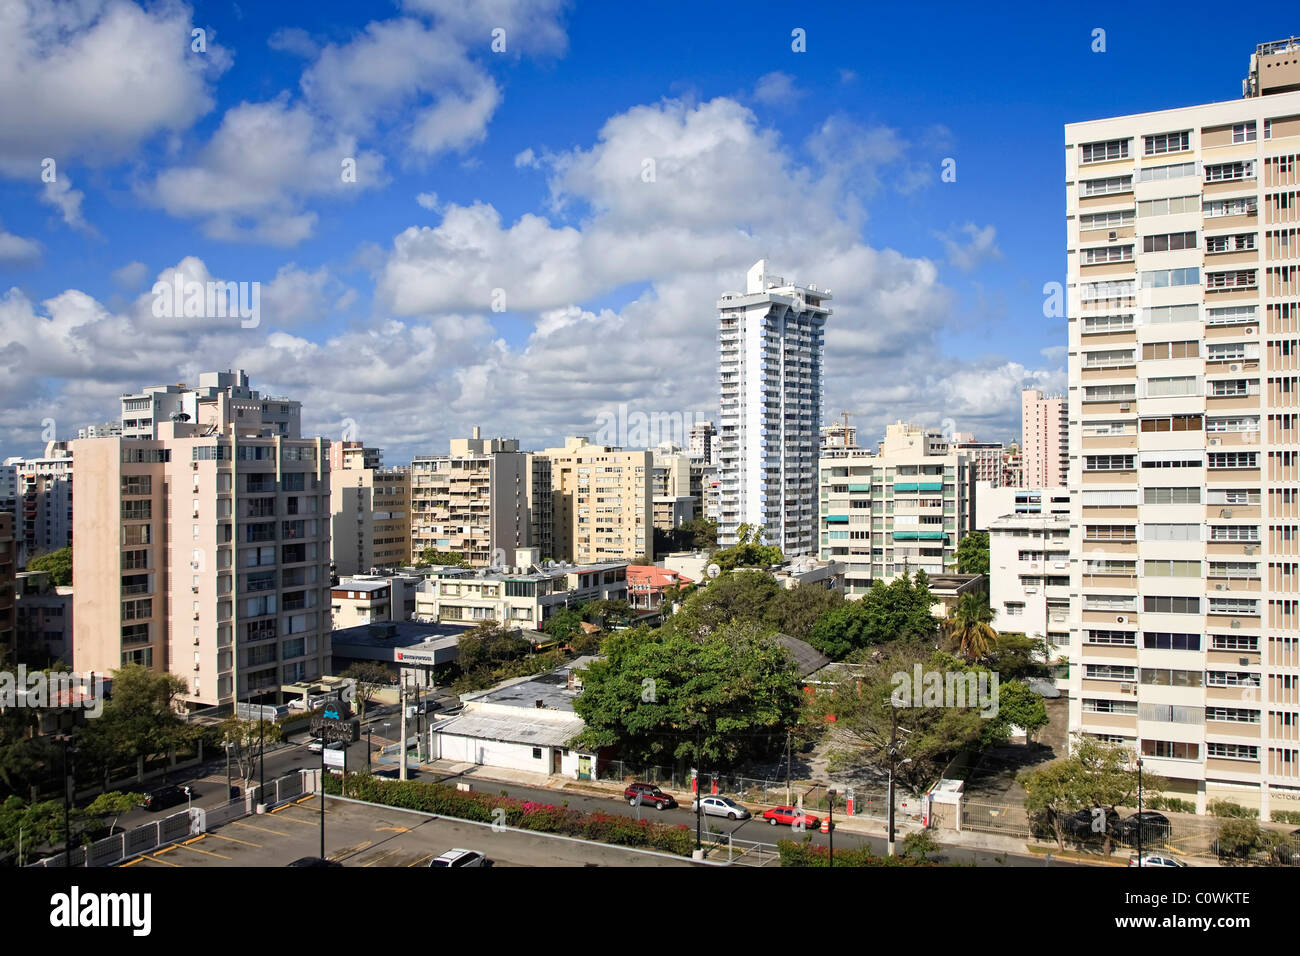 Usa, Caribbean, Puerto Rico, San Juan, Old Town, Condado Resort Area Stock Photo